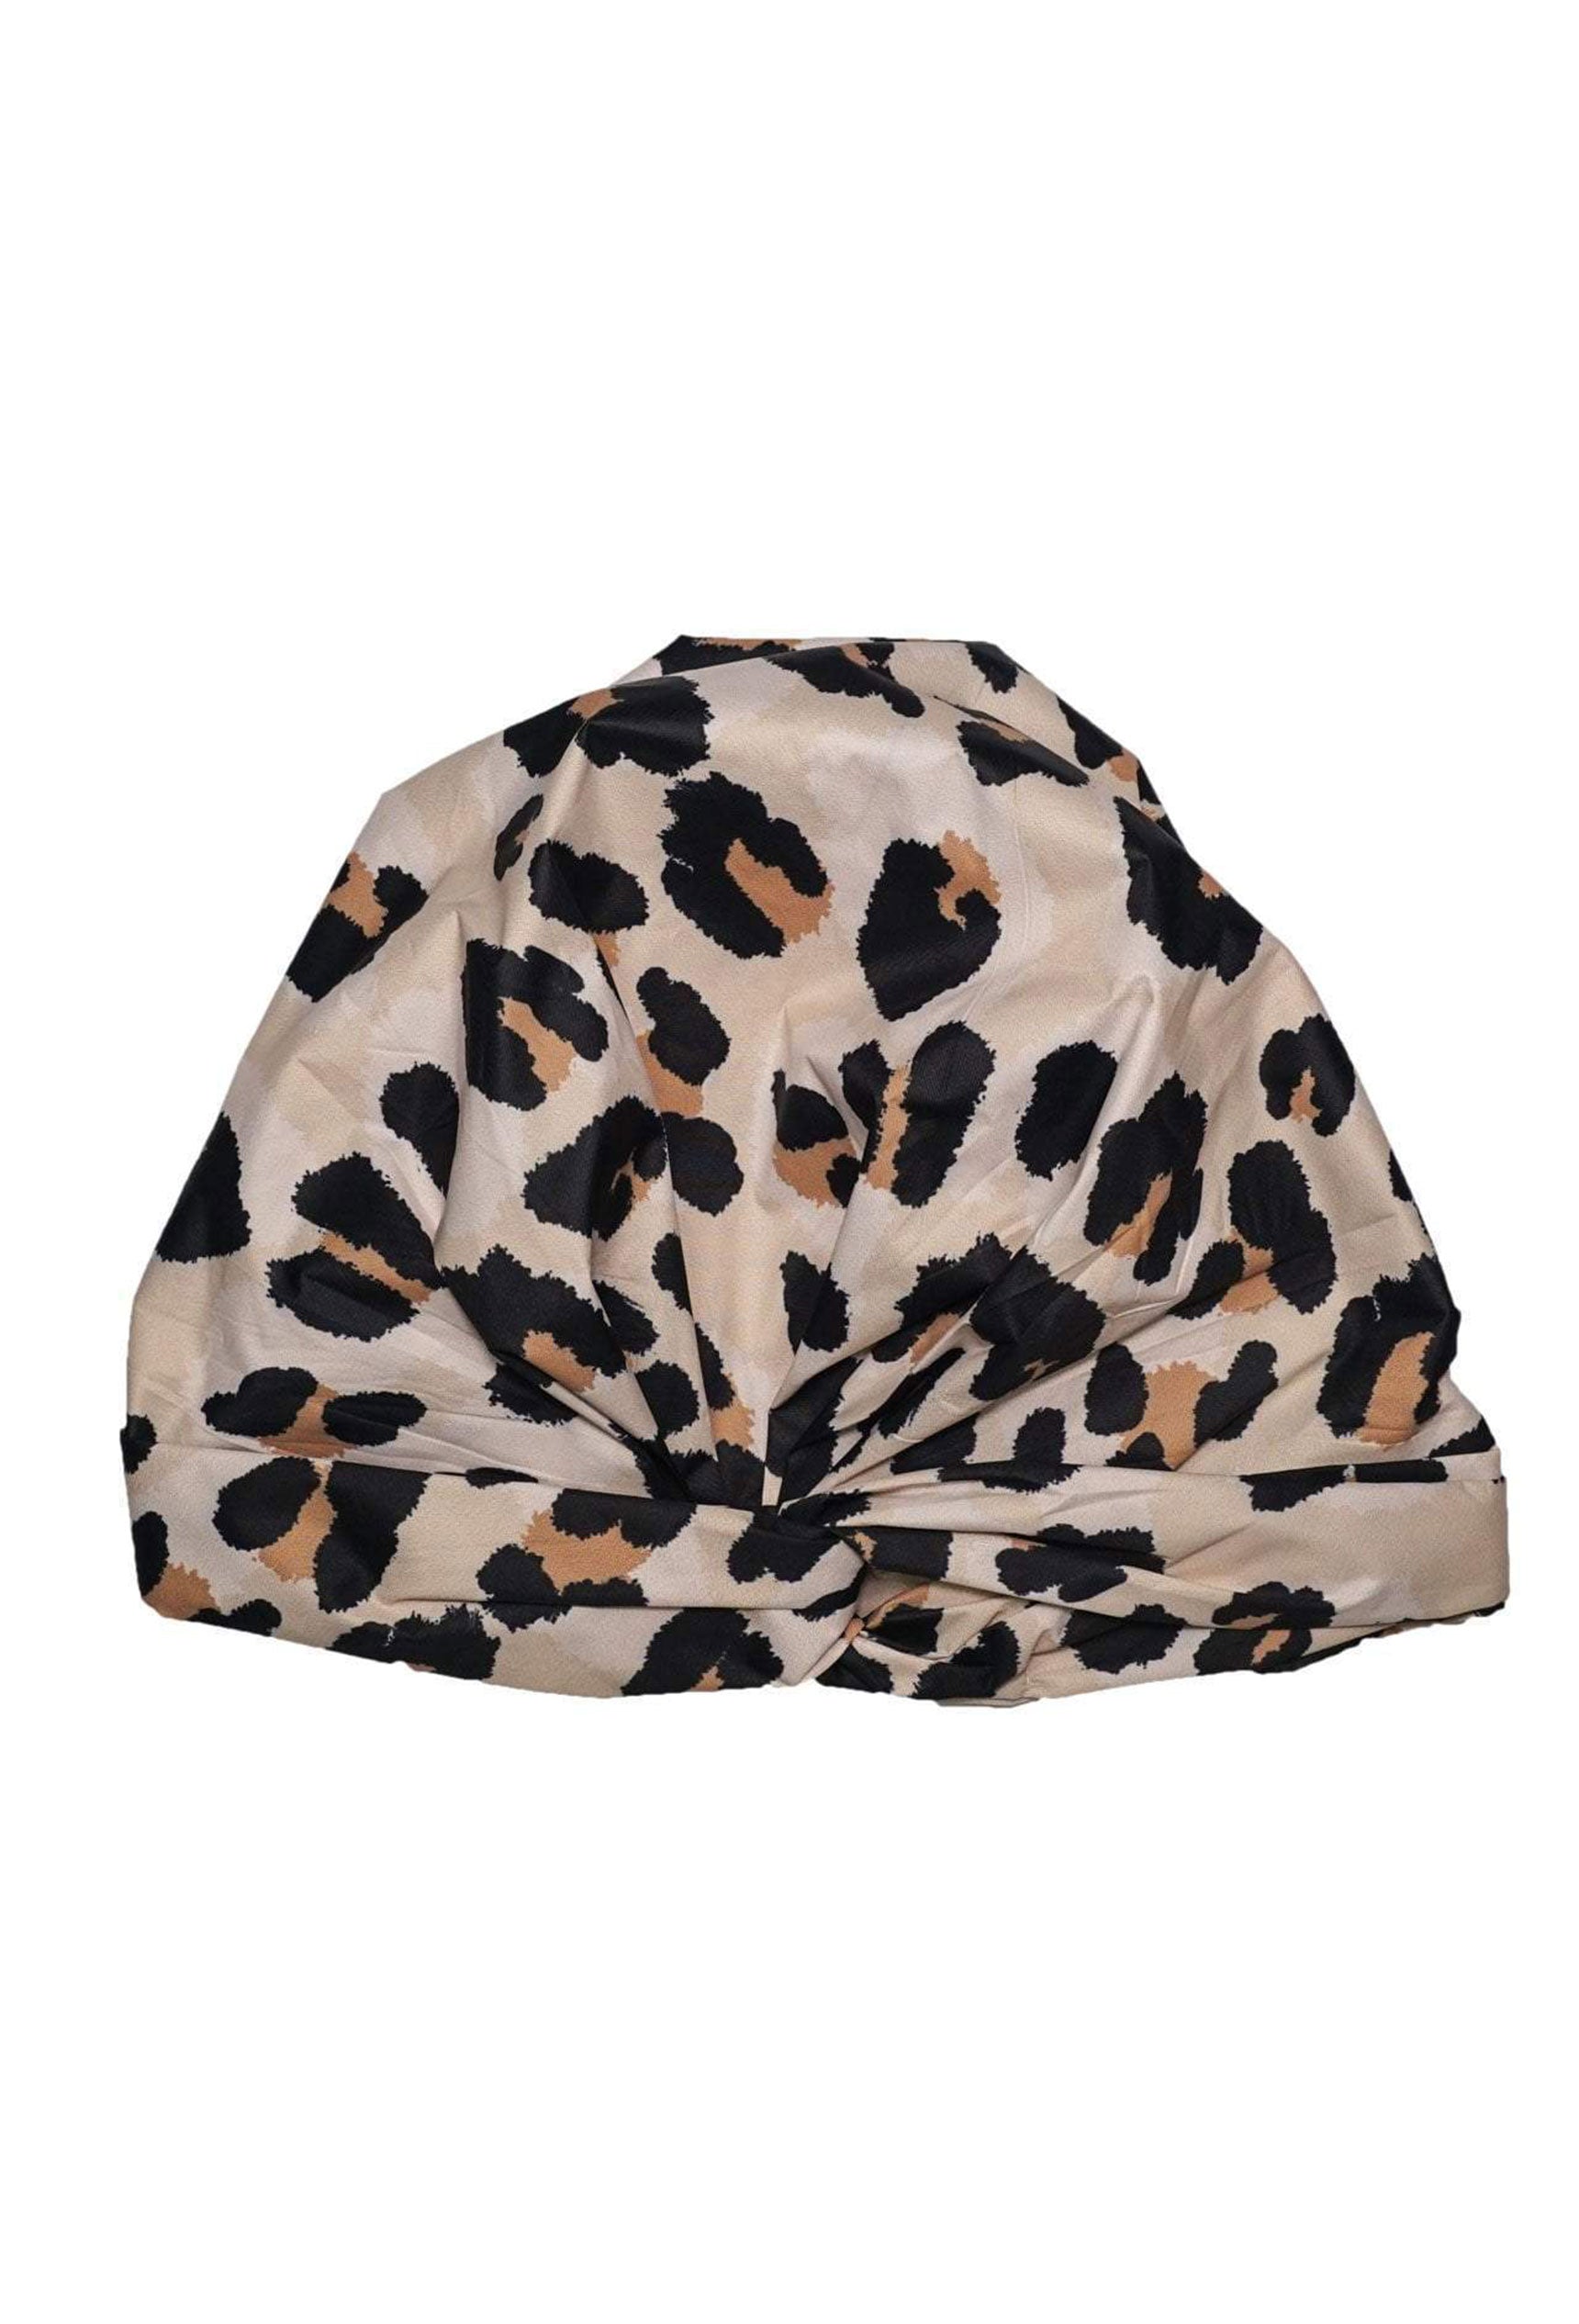 Kitsch Luxe Shower Cap in Leopard, leopard shower cap 